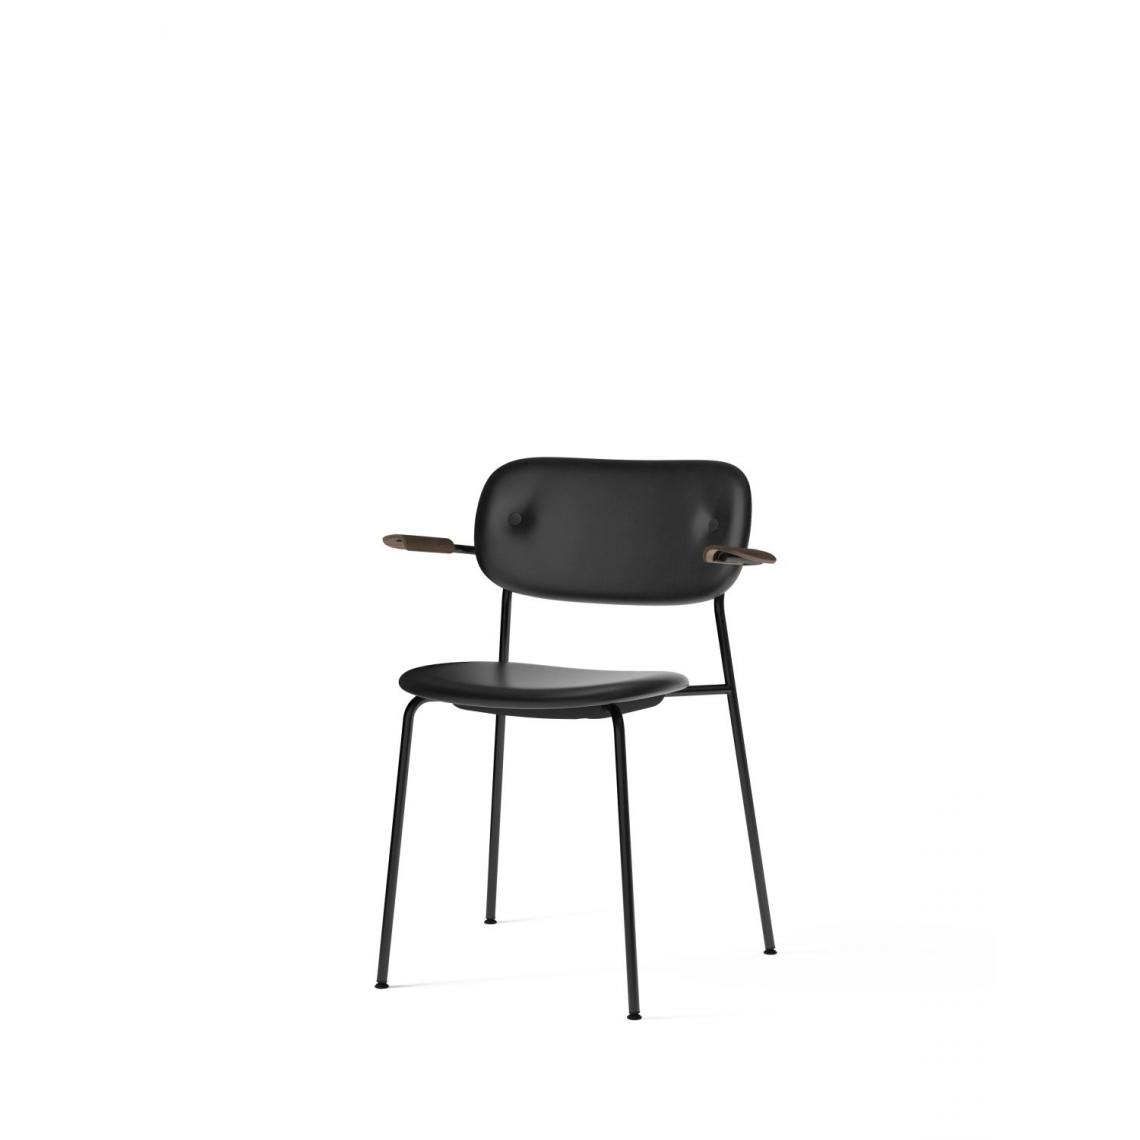 Menu - Co Dining Chair avec accoudoir - noir - MenuCoChairDakar0842 - chêne, teinté foncé - Chaises